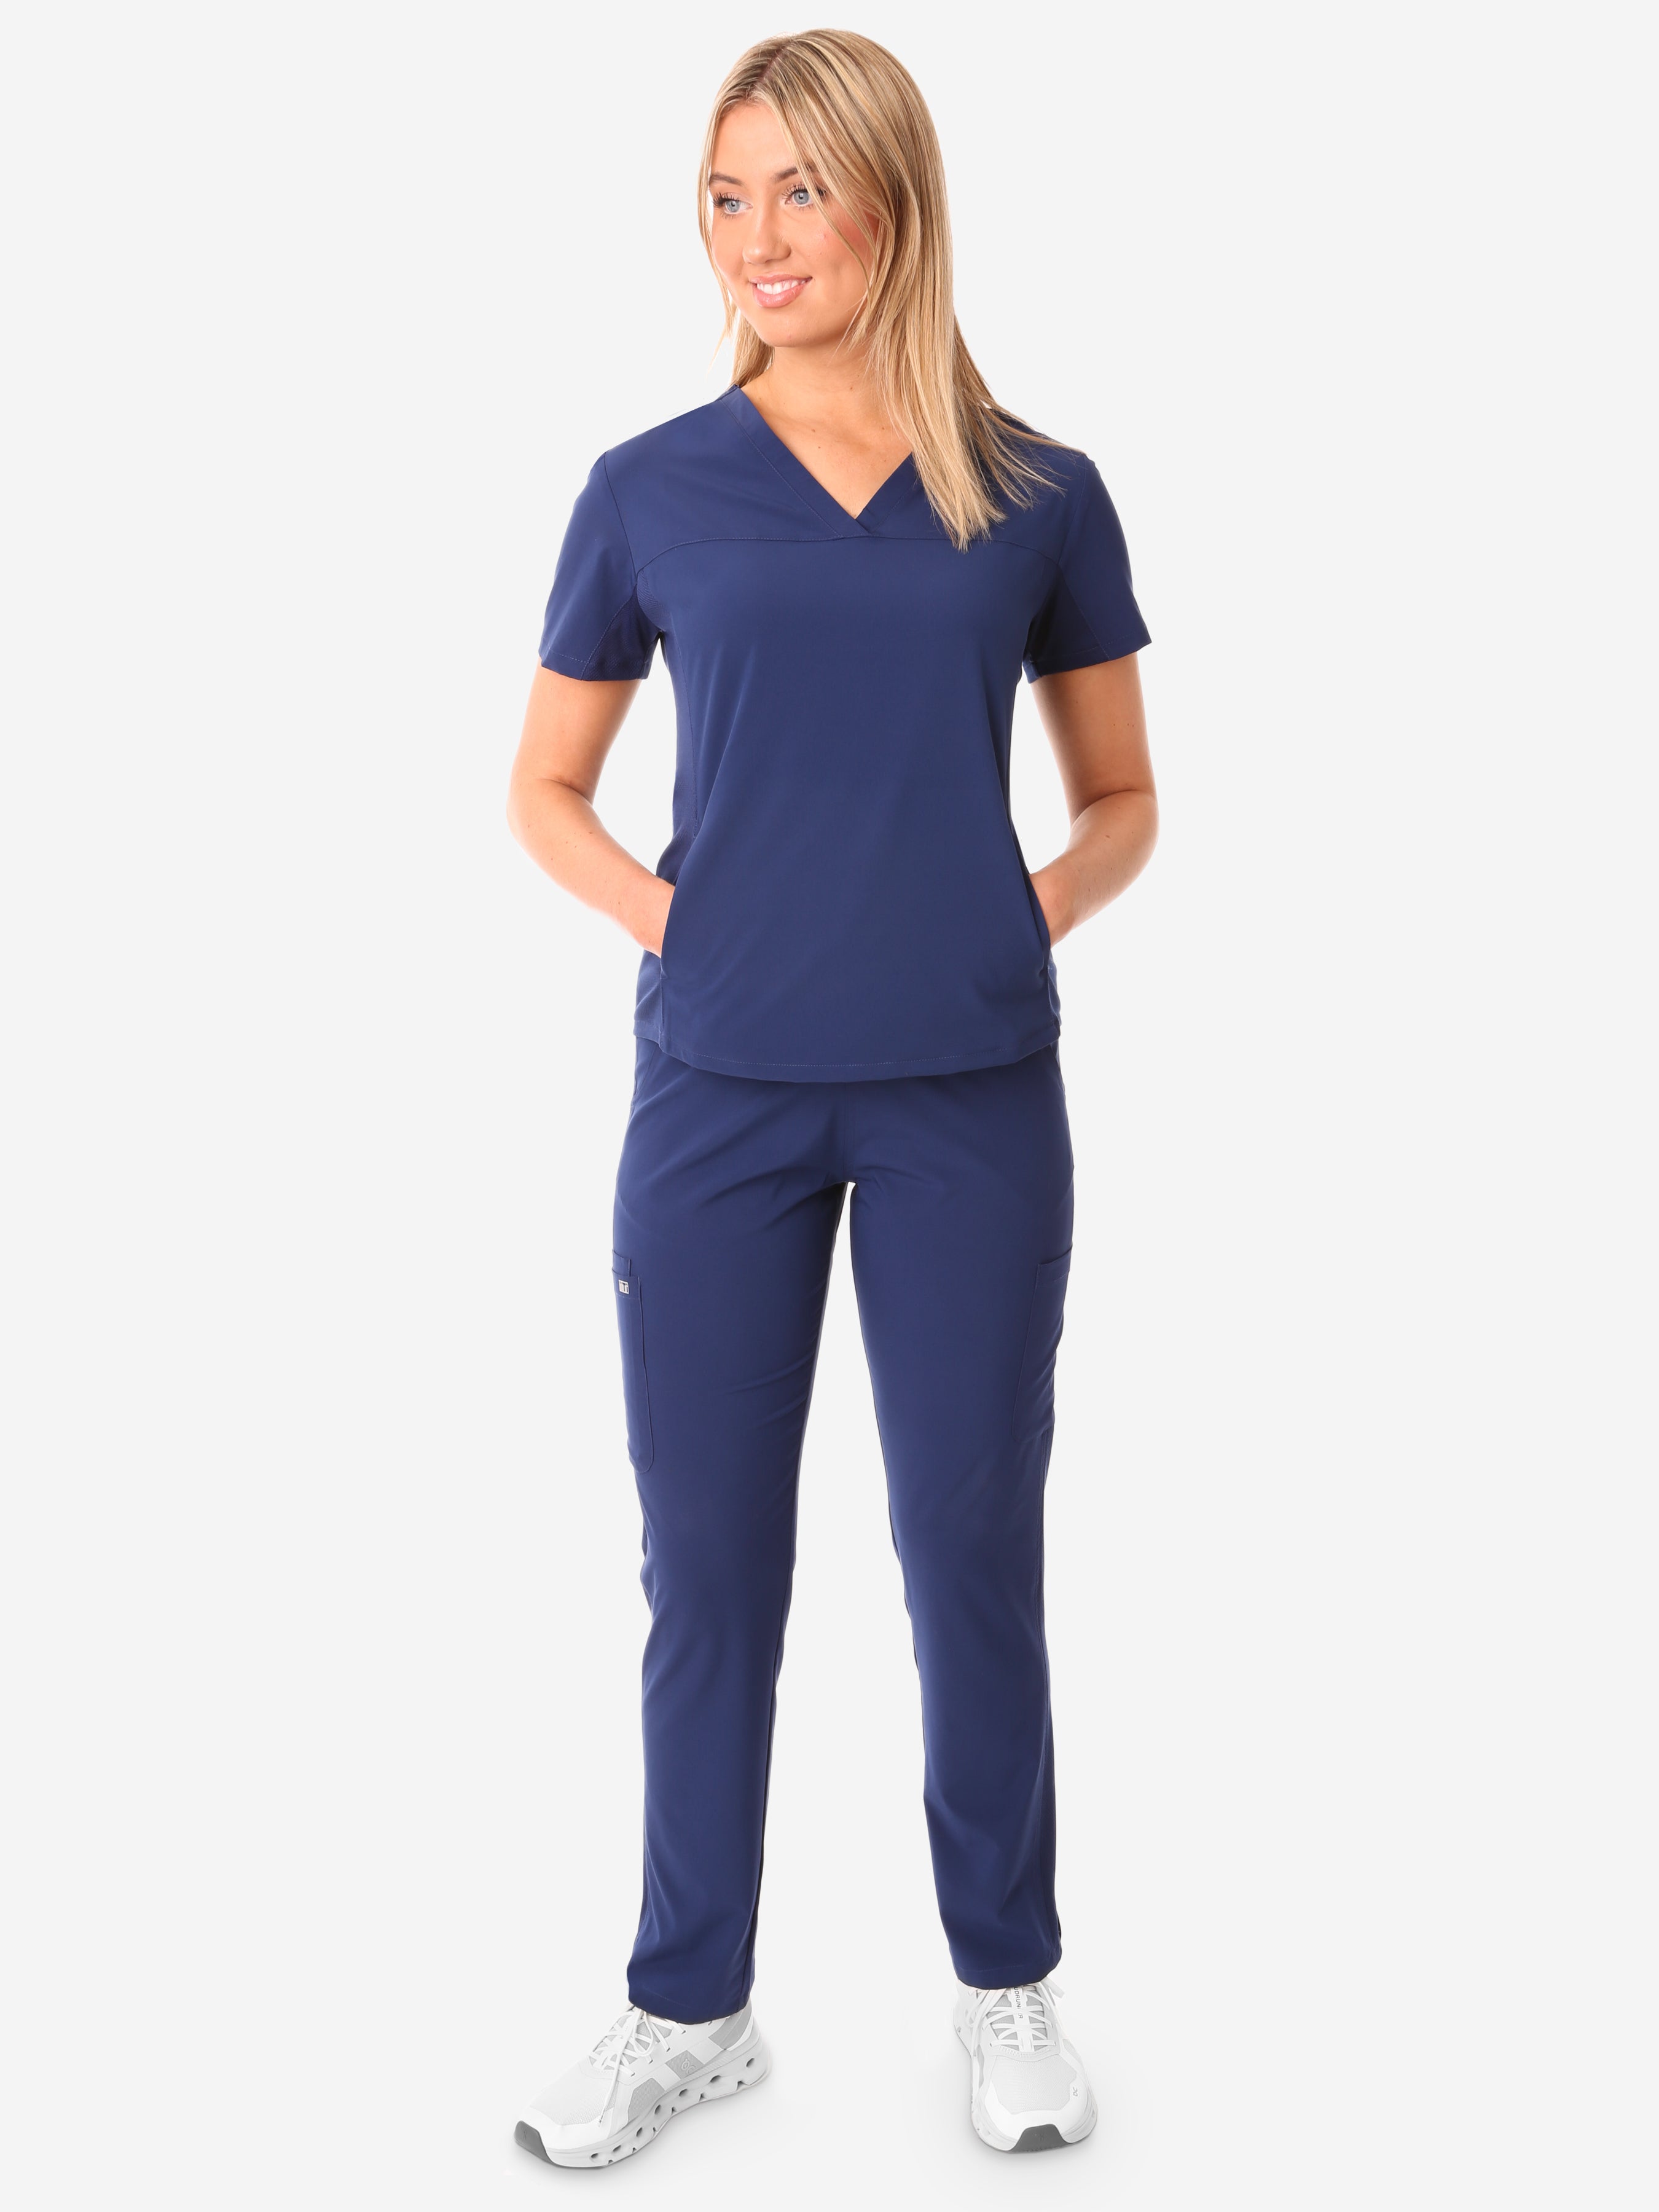 TiScrubs Stretch Women's Navy Blue Stash-Pocket Scrub Top + 9-Pocket Pants Full Body Front View